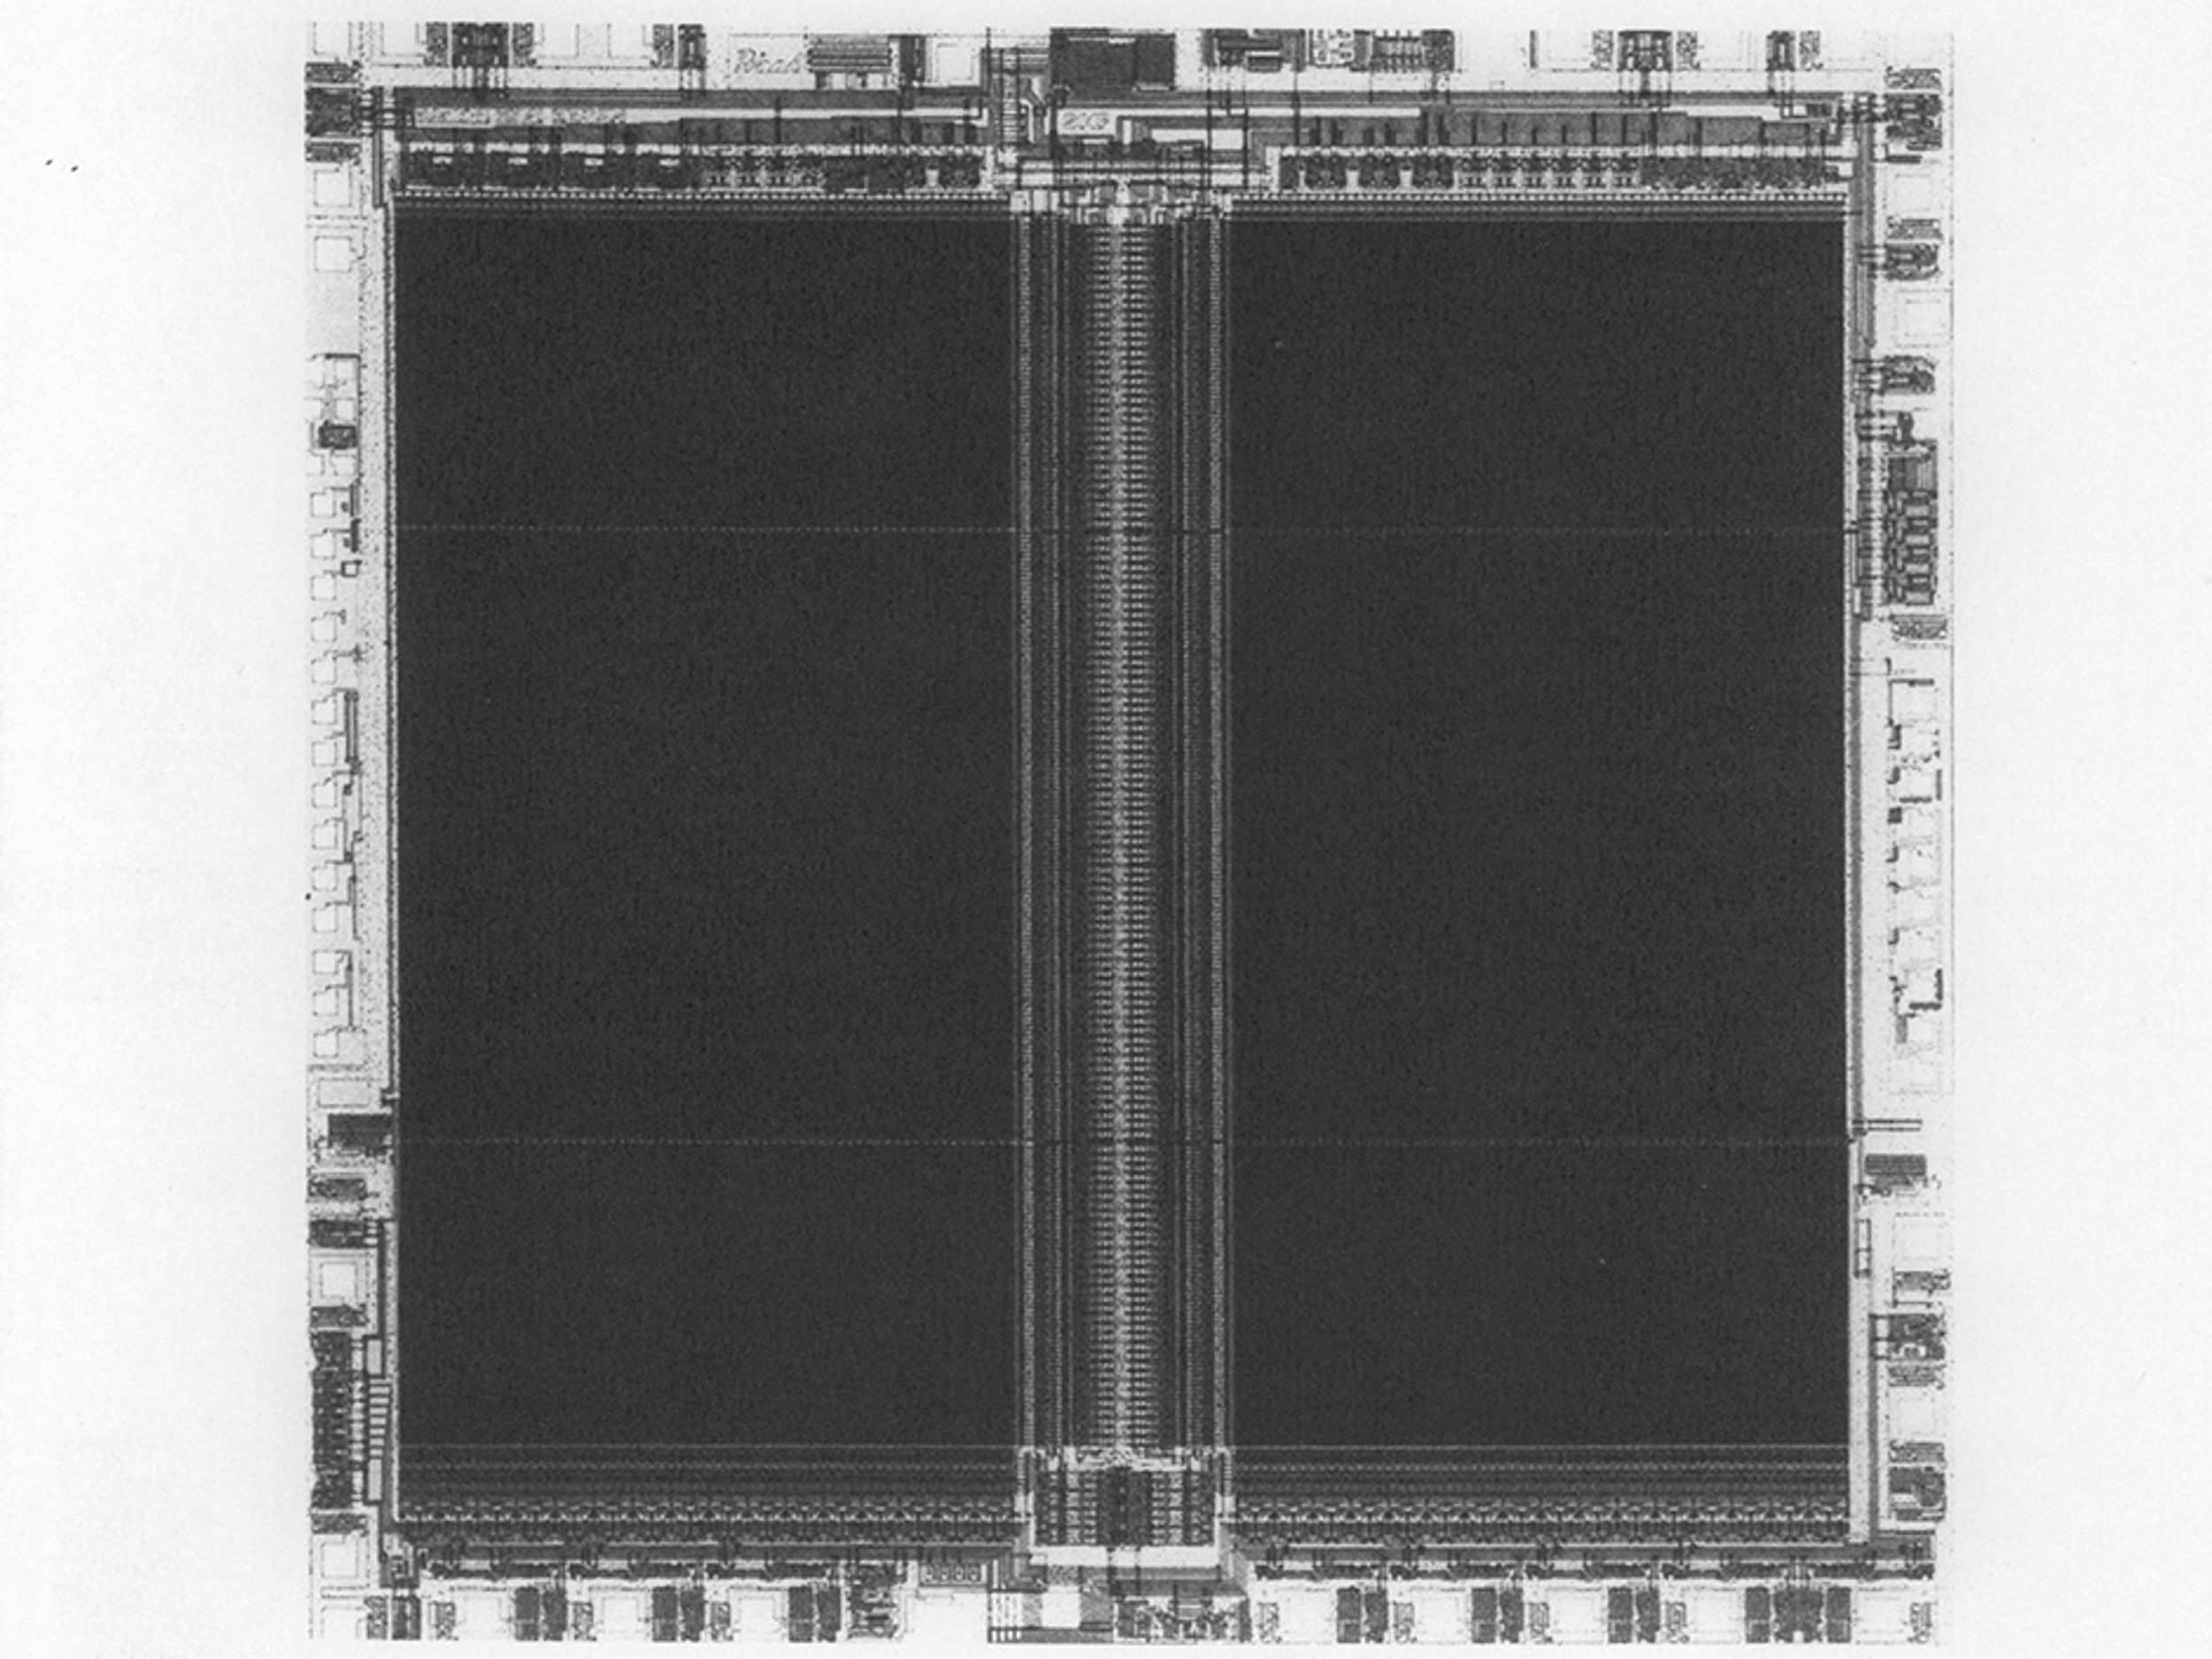 Toshiba NAND Flash Memory chip